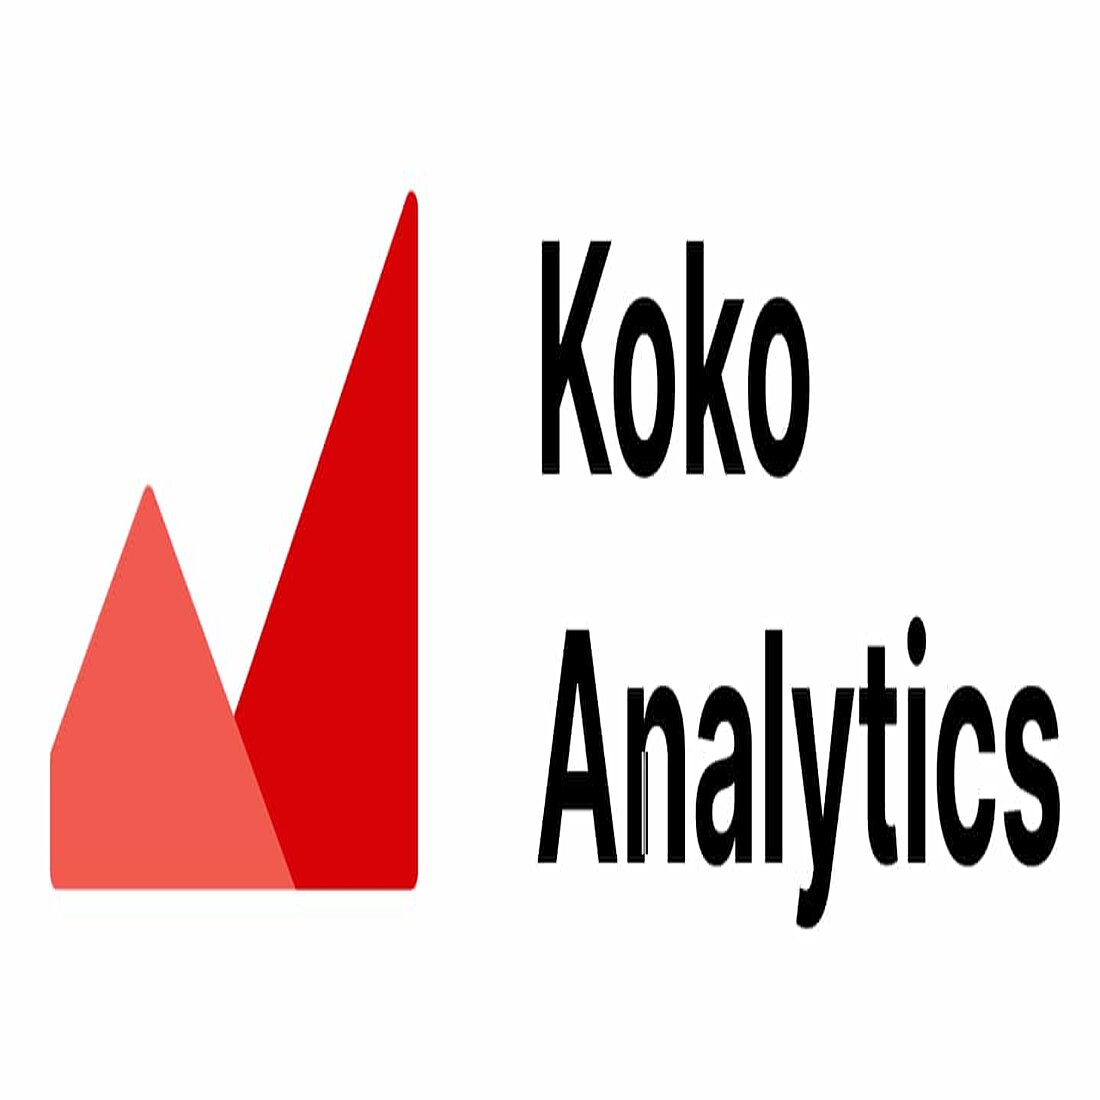 Koko Analytics is one of the best privacy-perfect Wordpress analytics tools